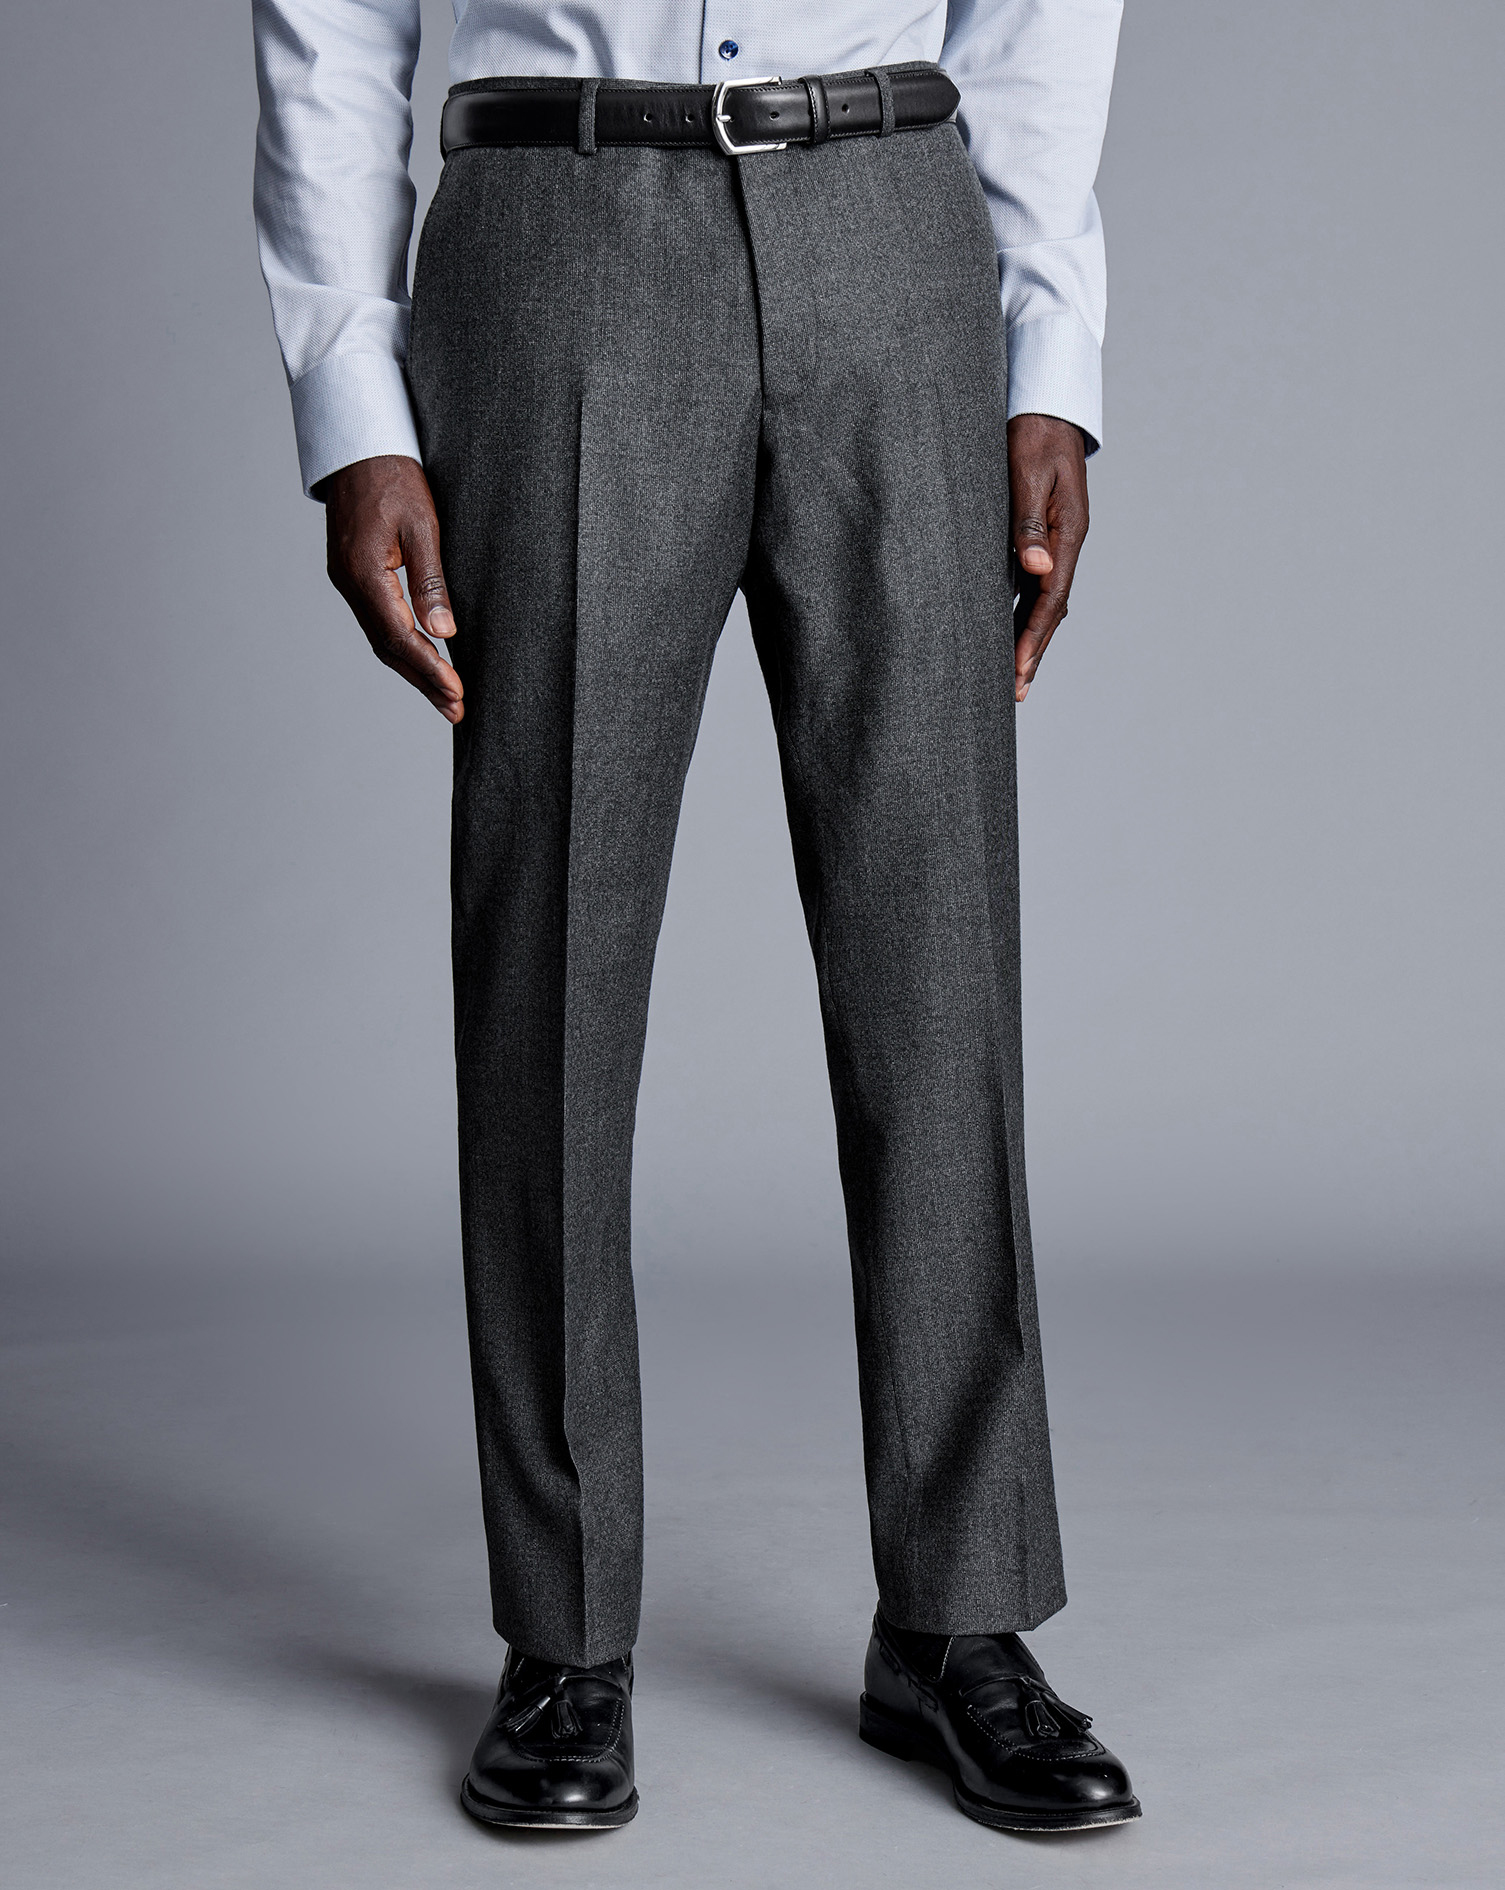 Men's Charles Tyrwhitt Italian Pindot Suit Trousers - Grey Size 32/32 Wool
